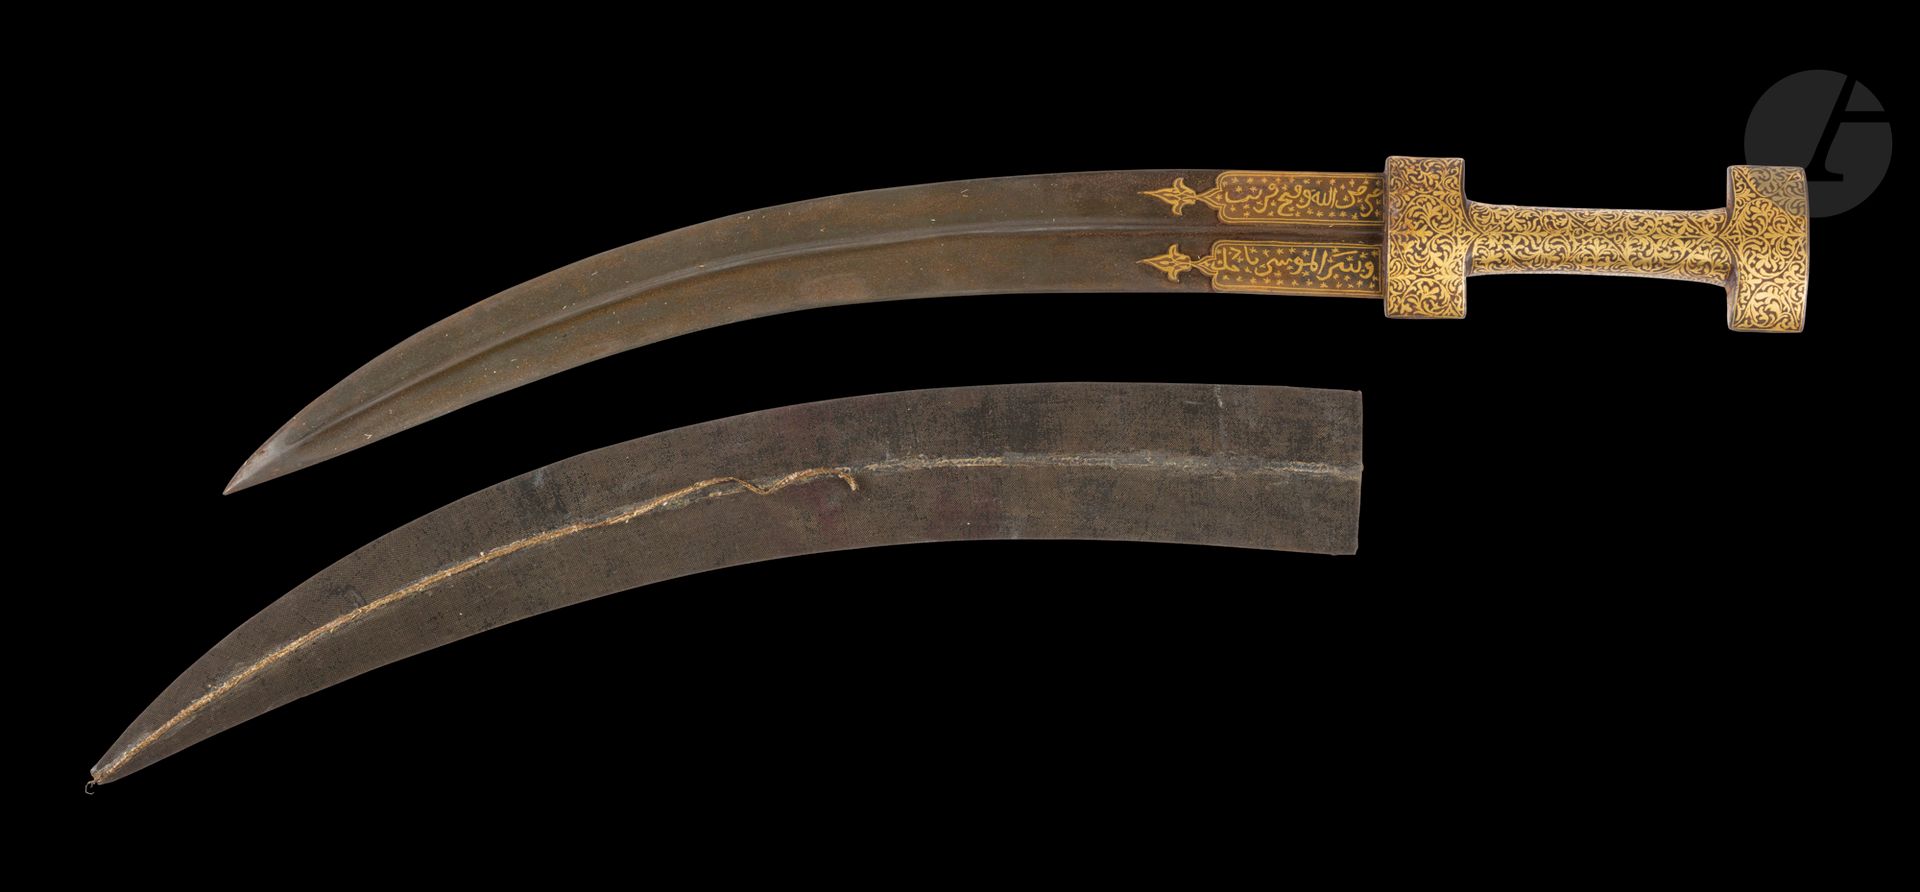 Null Jambiyya dagger, Ottoman Empire, early 19th century
Curved double-edged bla&hellip;